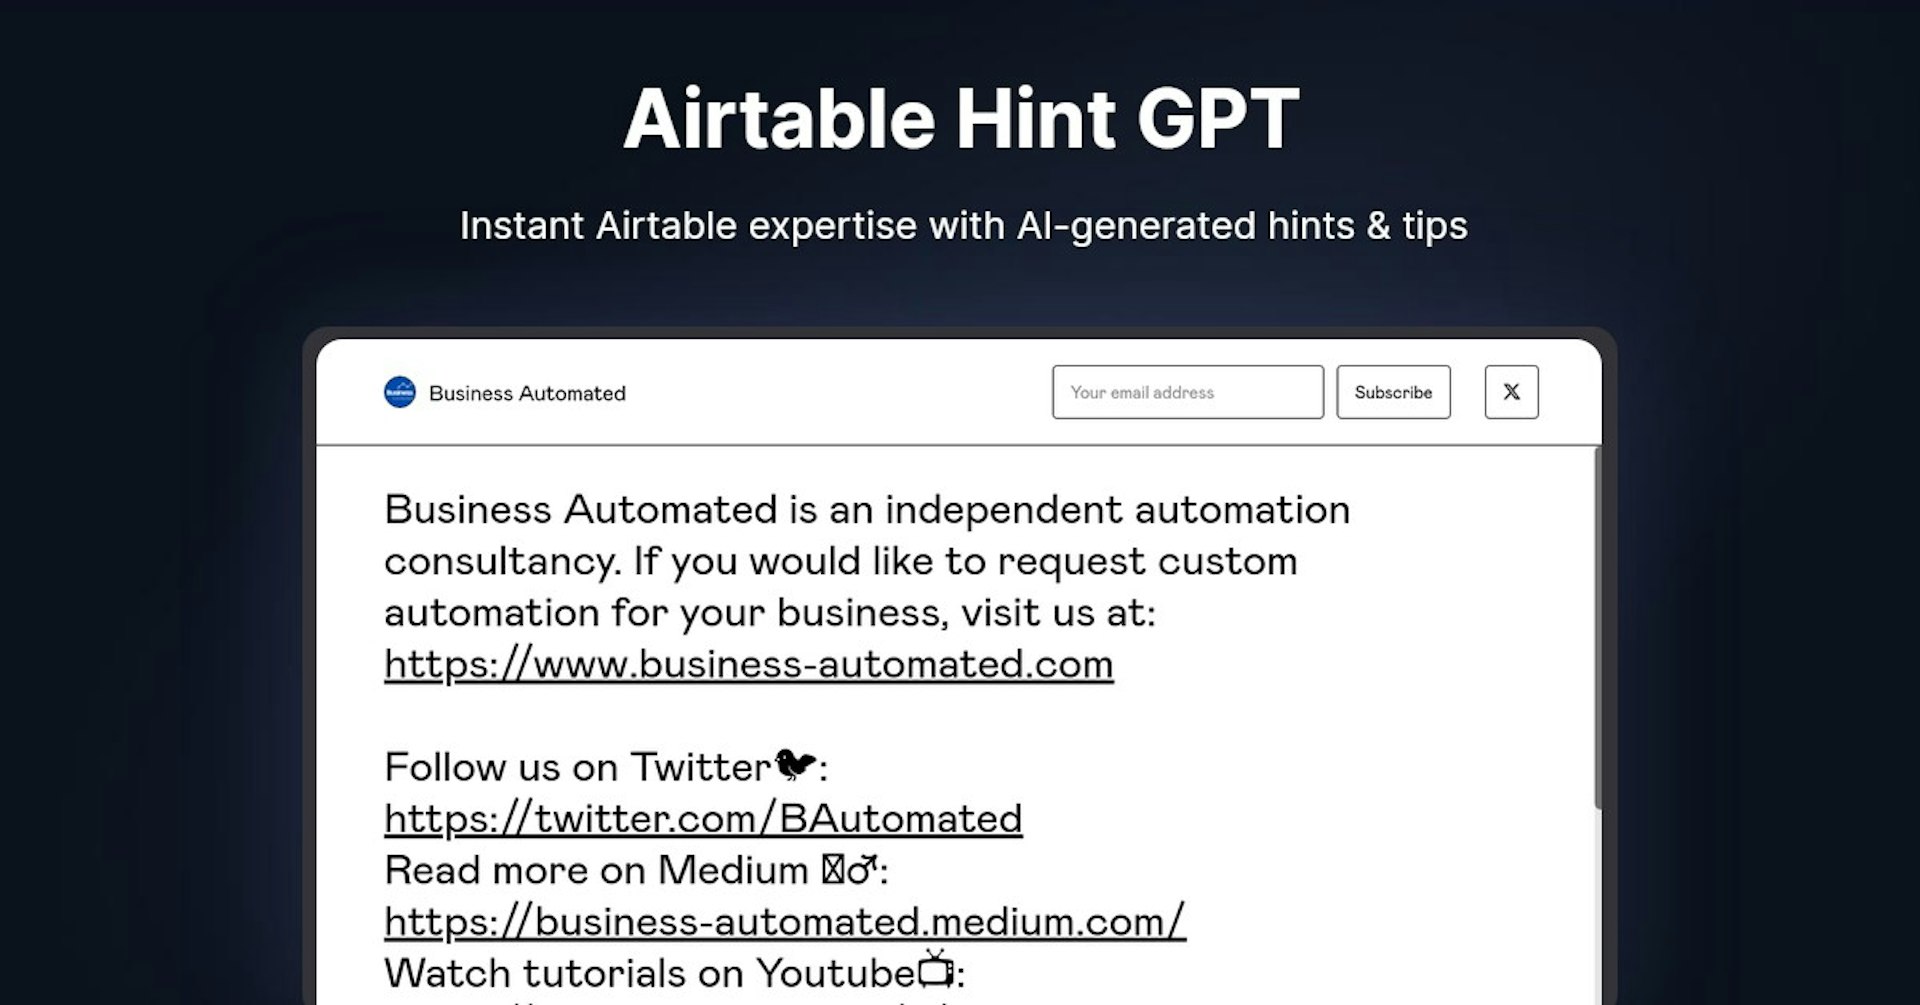 Airtable Hint GPT